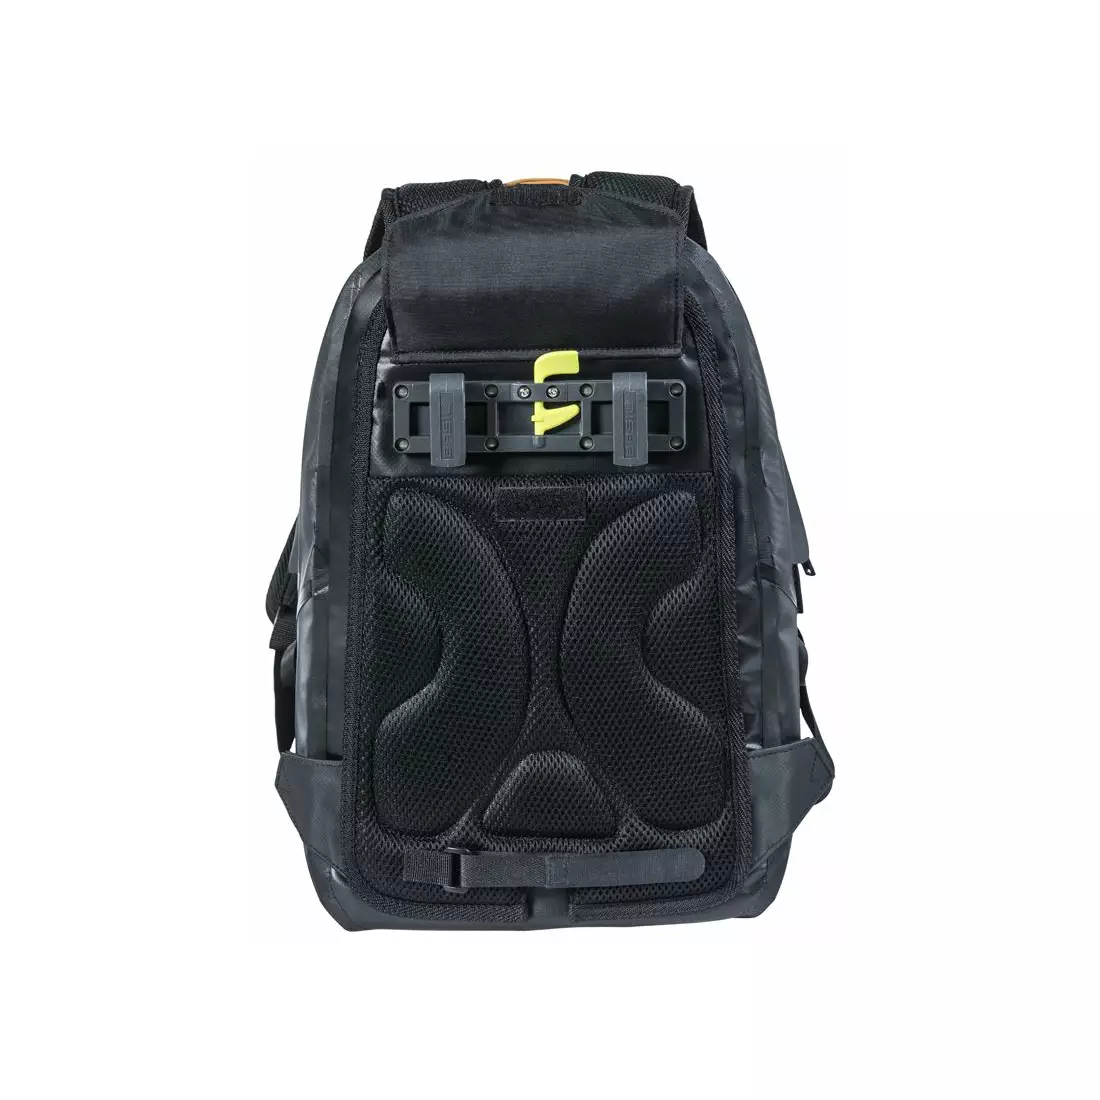 Plecak BASIL URBAN DRY BACKPACK 18L, Bicycle backpack, Hook-On System hooks, black BAS-17766